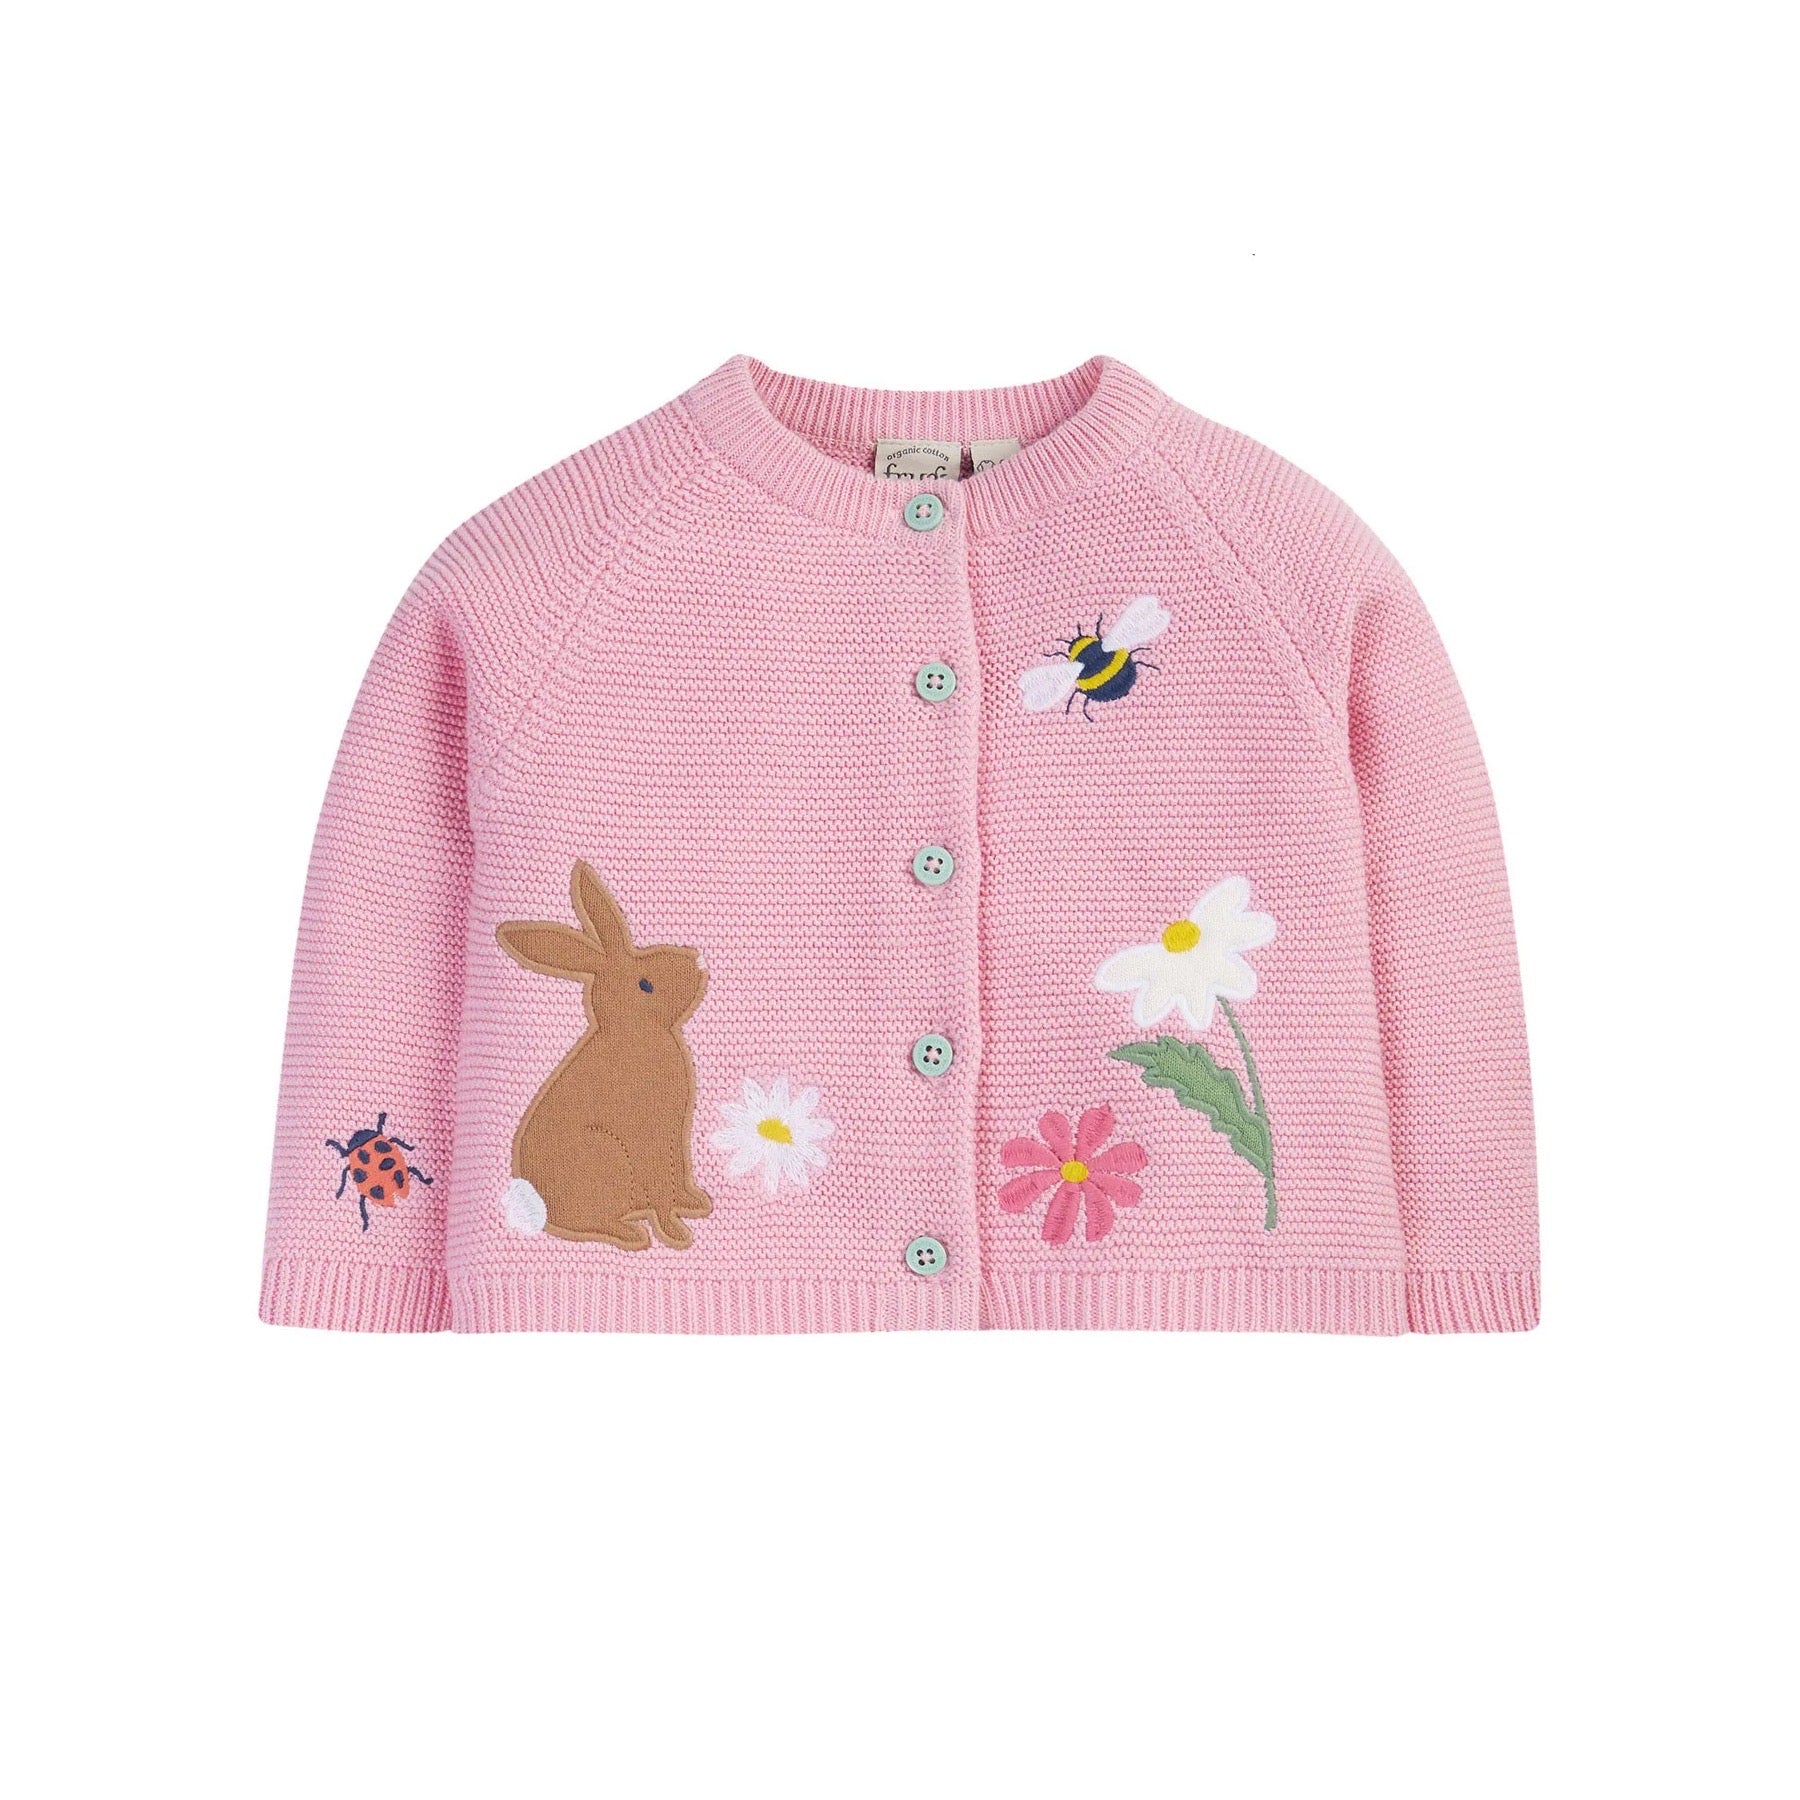 Frugi Colby Infant Cardigan Kk6pi Rabbit Clothing 0-3M / Pink,3-6M / Pink,6-9M / Pink,9-12M / Pink,12-18M / Pink,18-24M / Pink,2-3YRS / Pink,3-4YRS / Pink